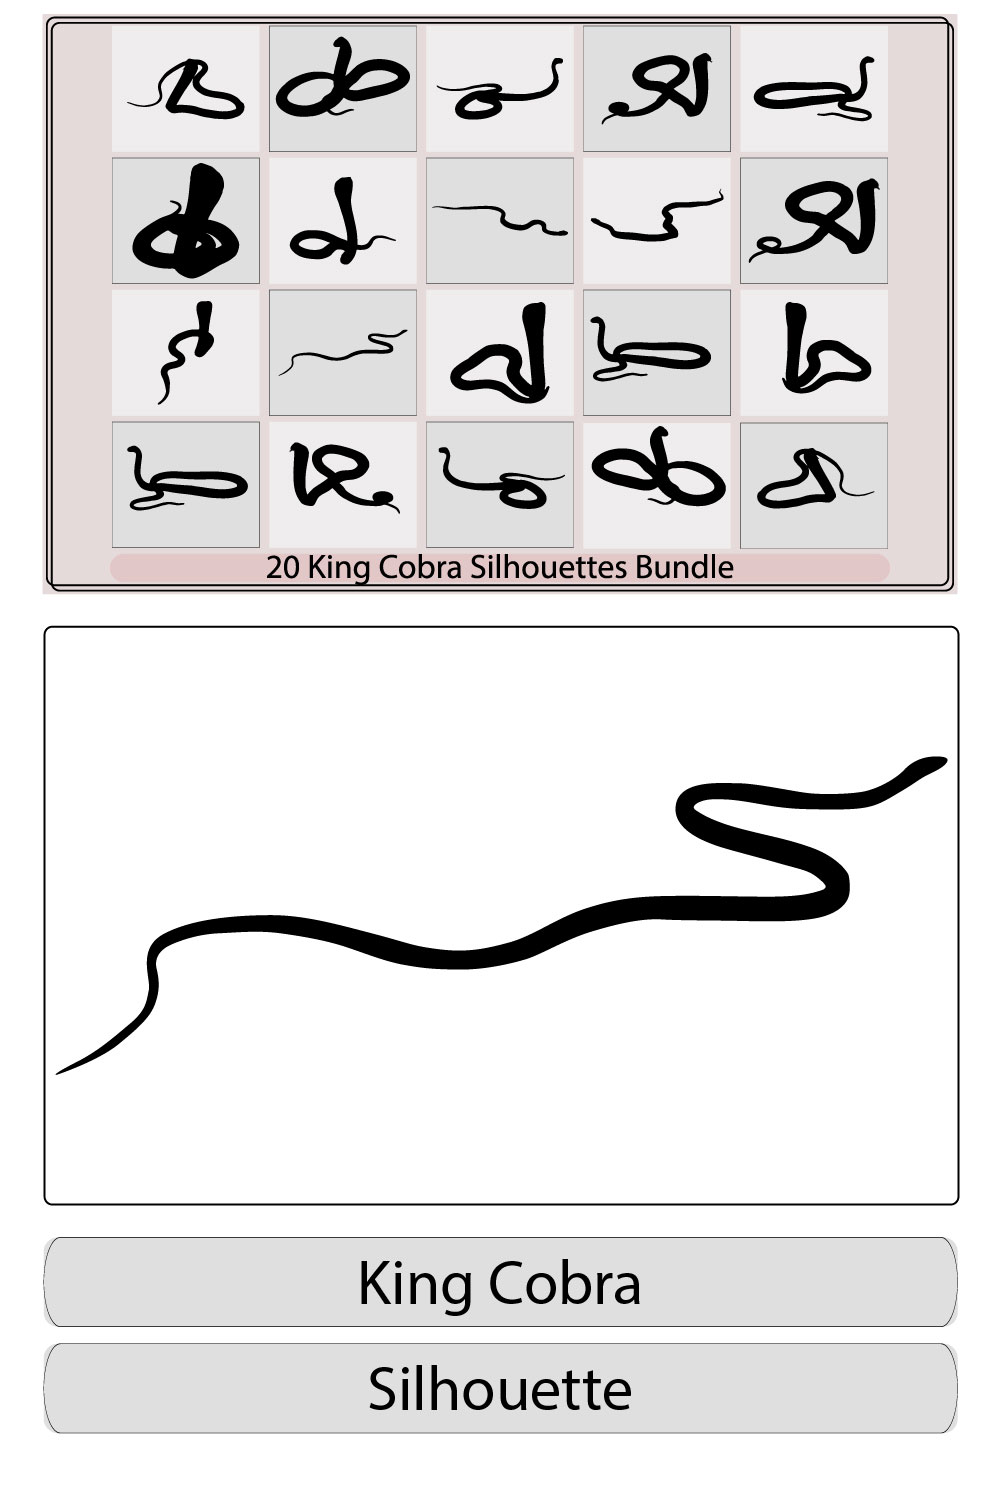 King Cobra silhouette icons,Cobra snake,King cobra silhouette,Black king cobra logo template design,King Cobra snake logo design vector pinterest preview image.